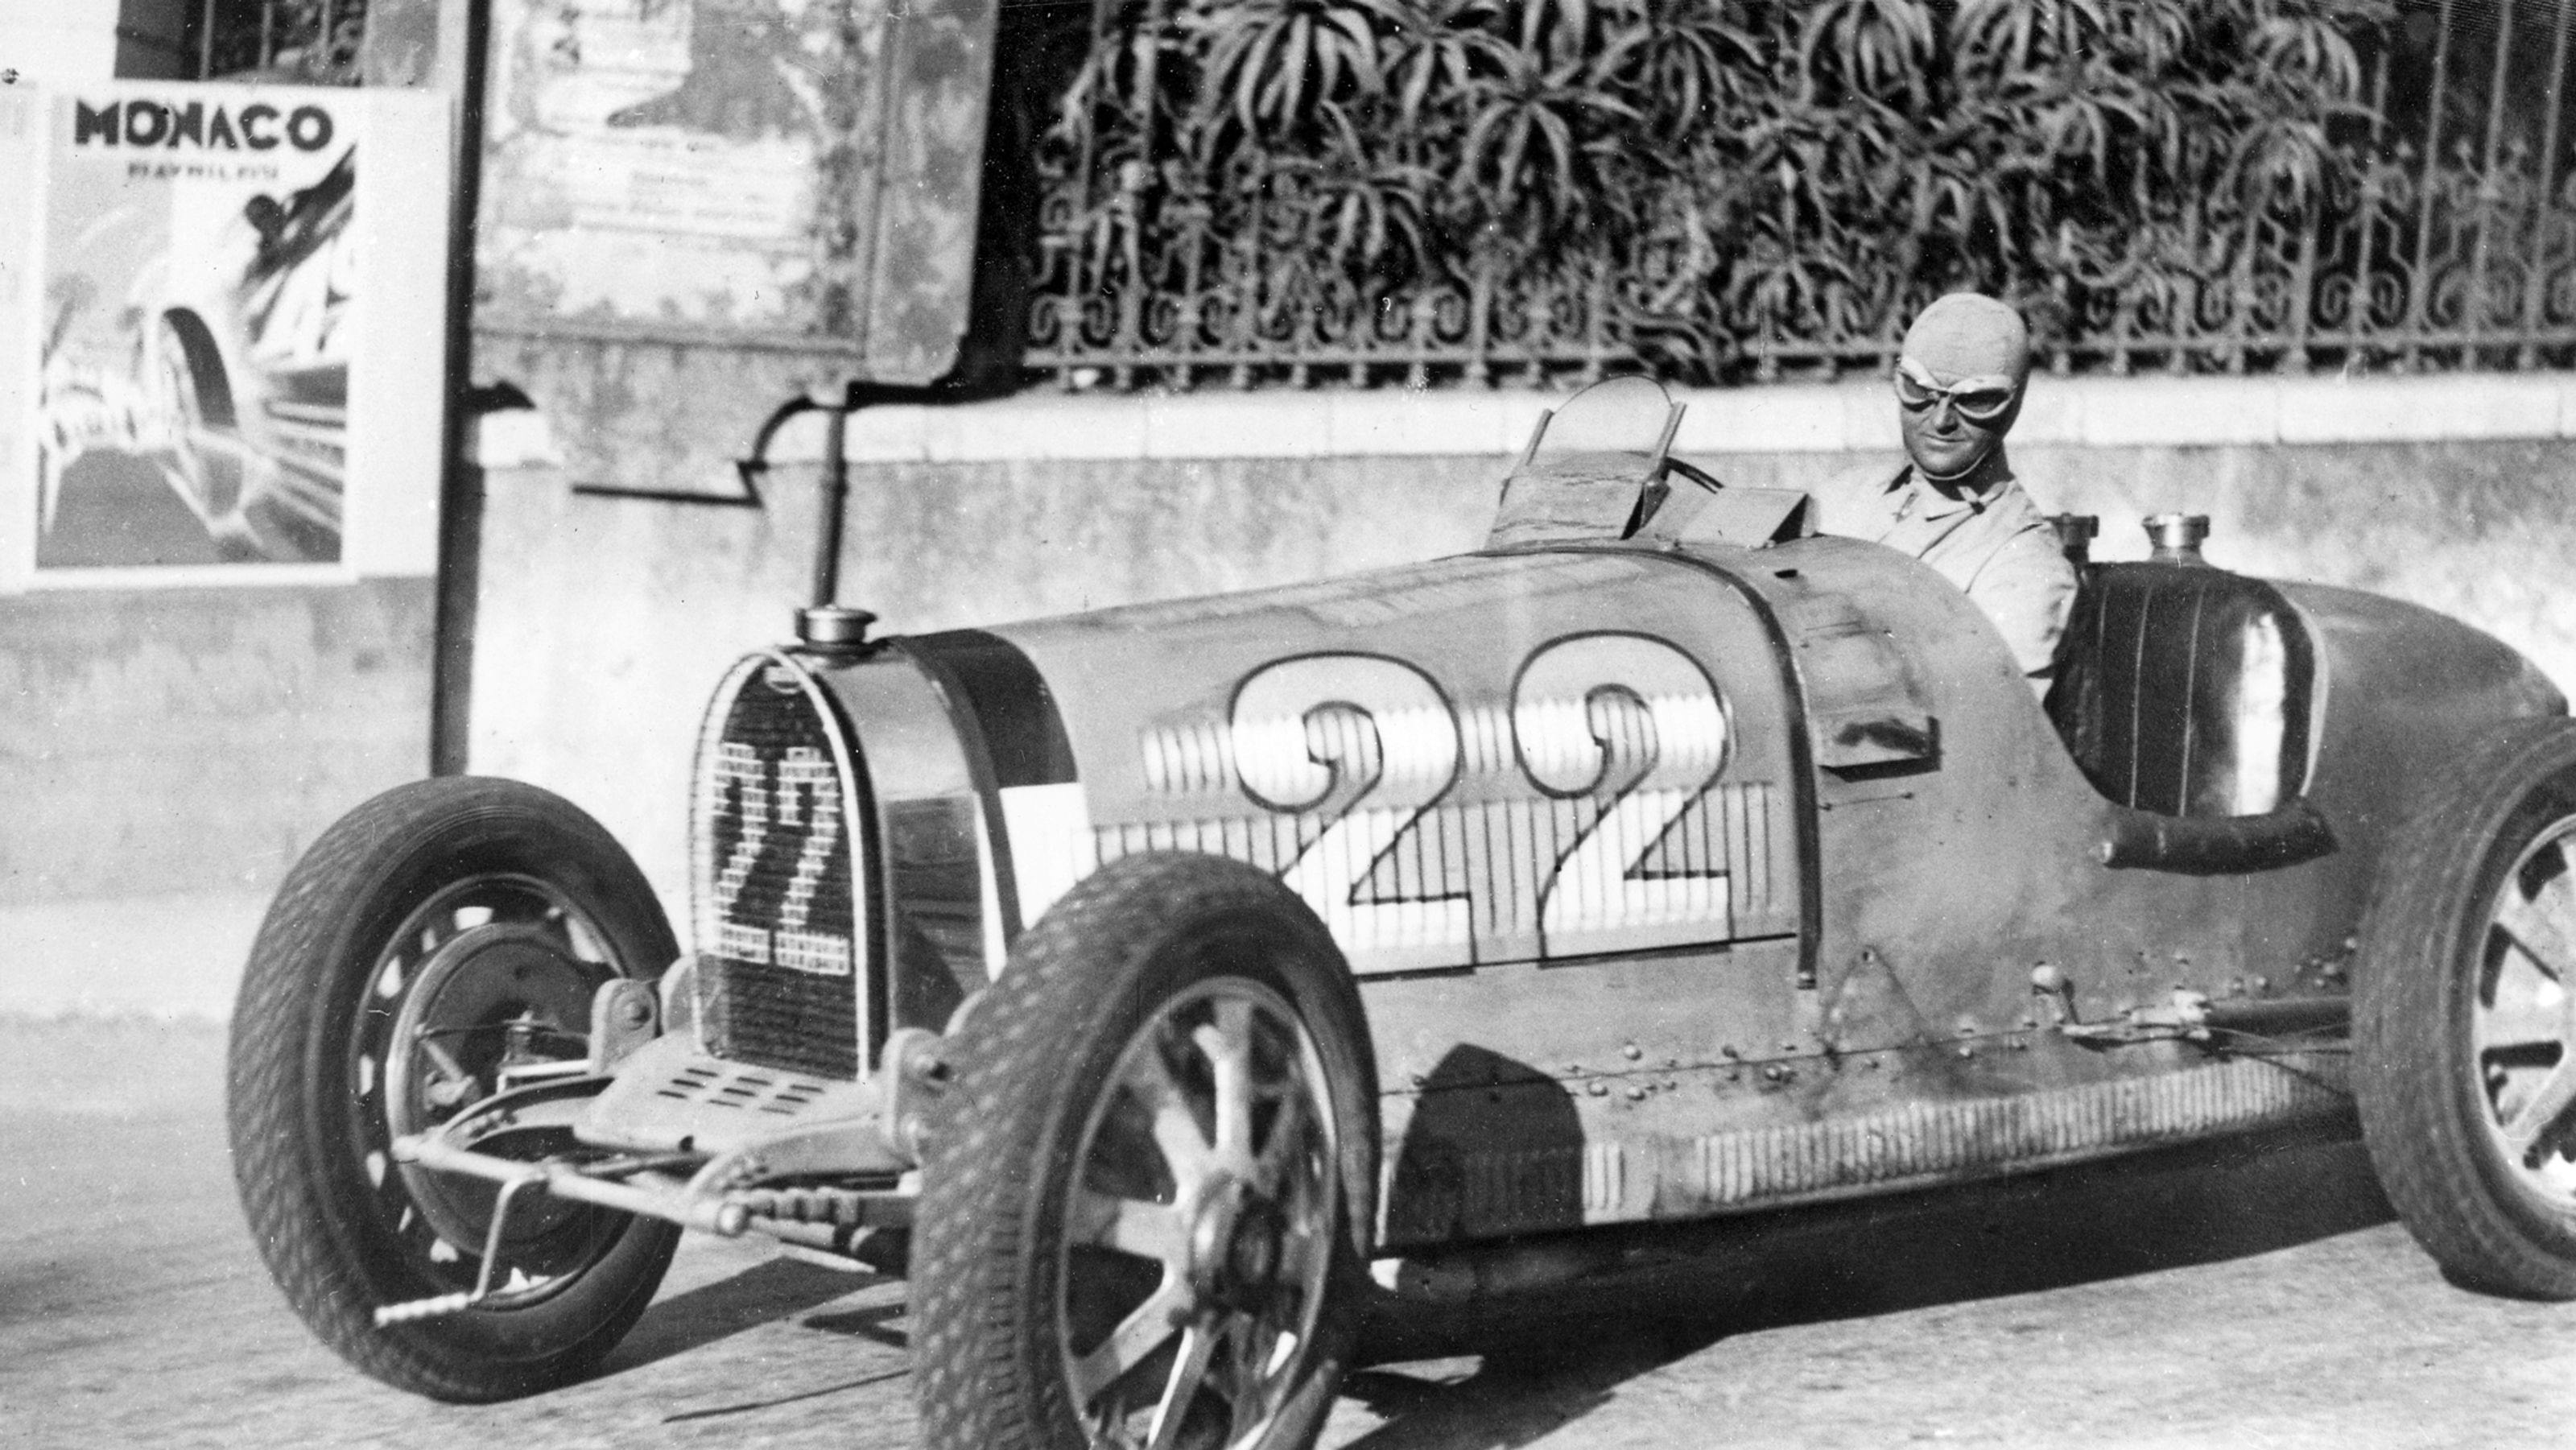 Bugatti, the Monaco Grand Prix and Louis Chiron – Writing Motor Racing History